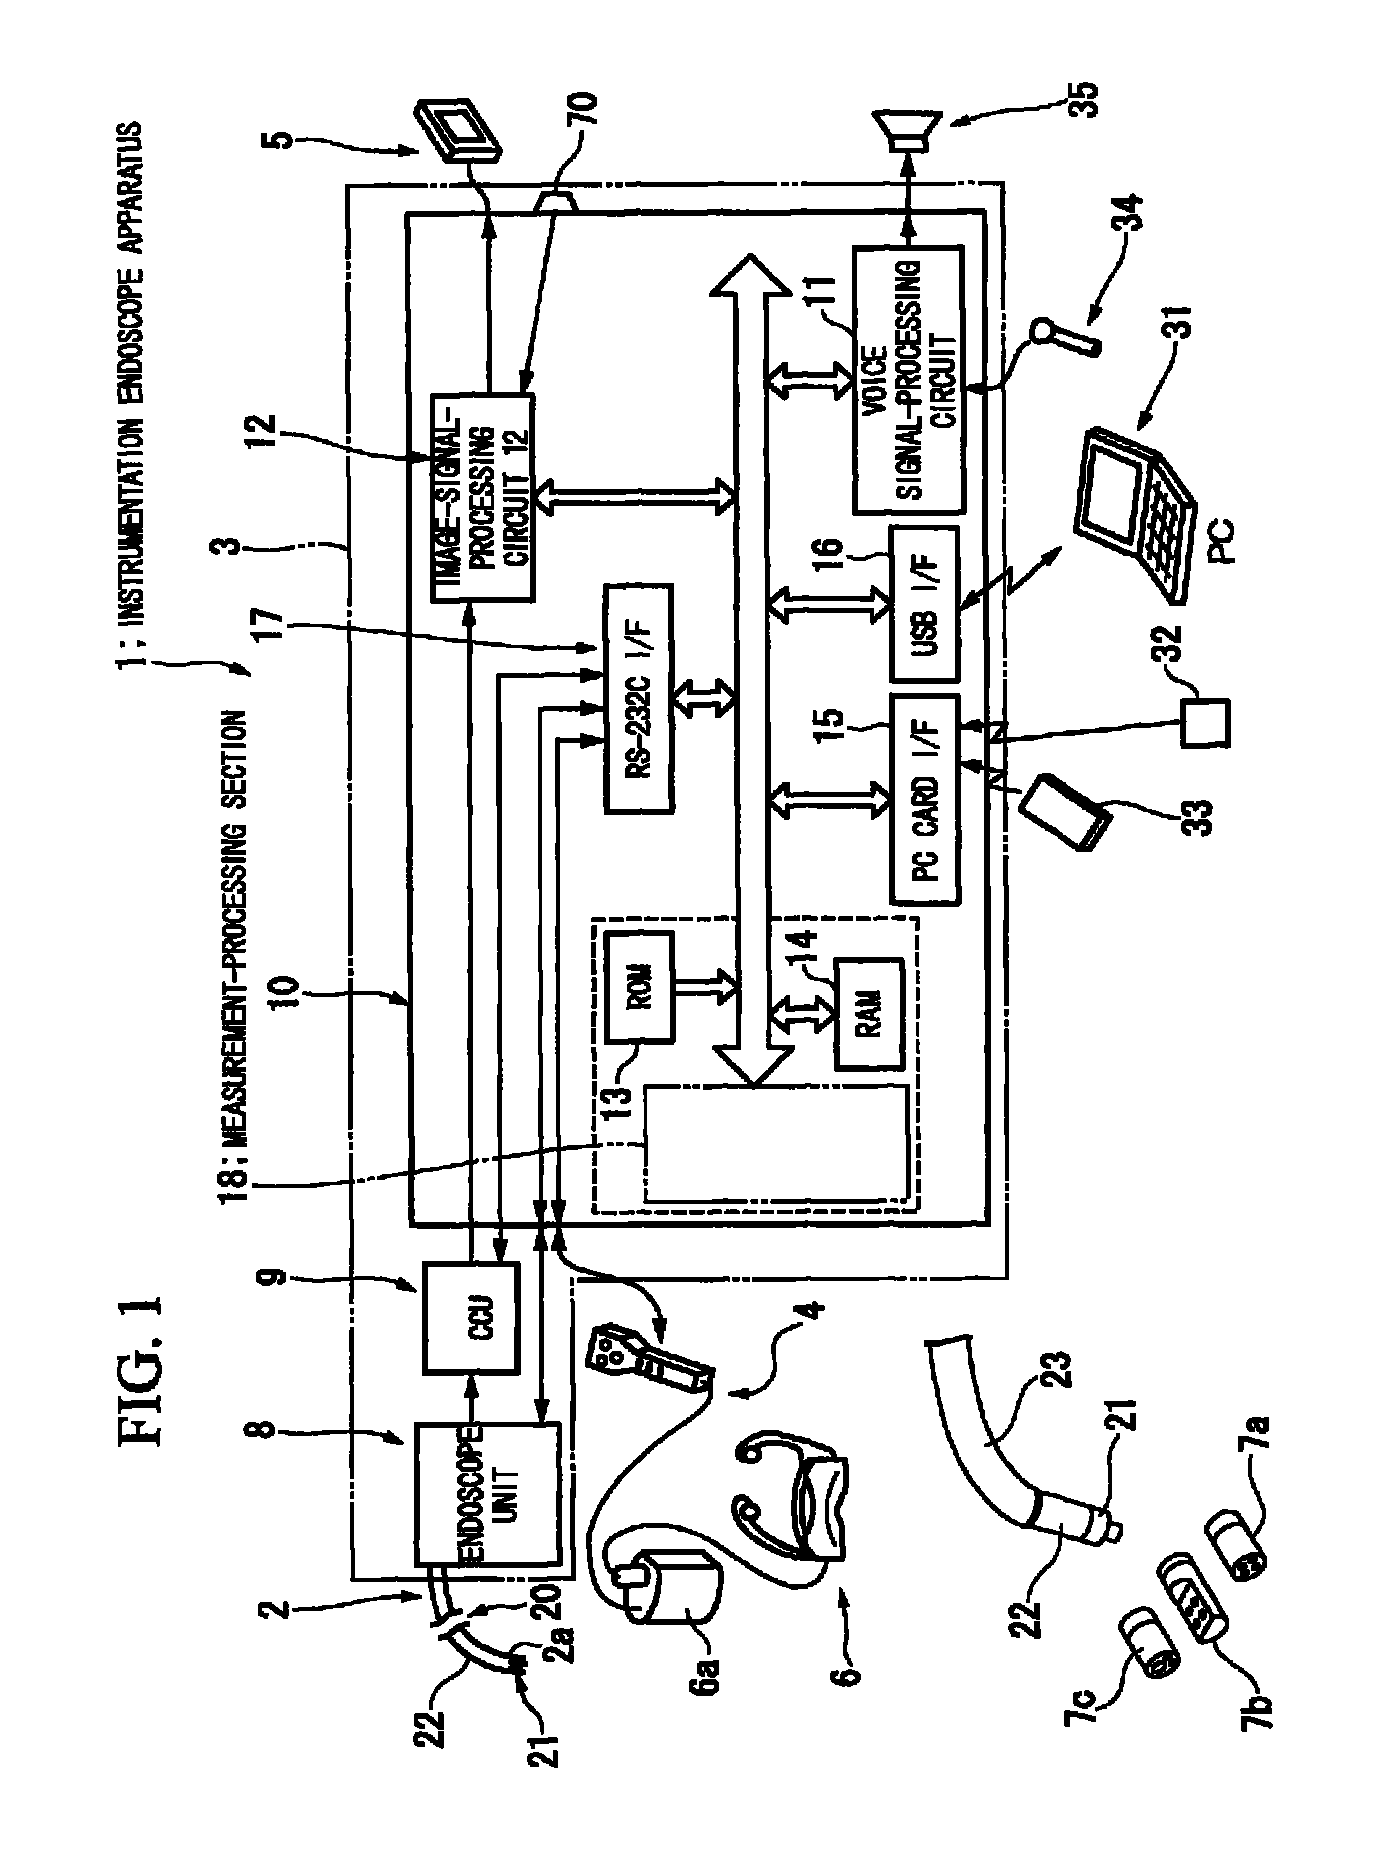 Endoscope apparatus and program